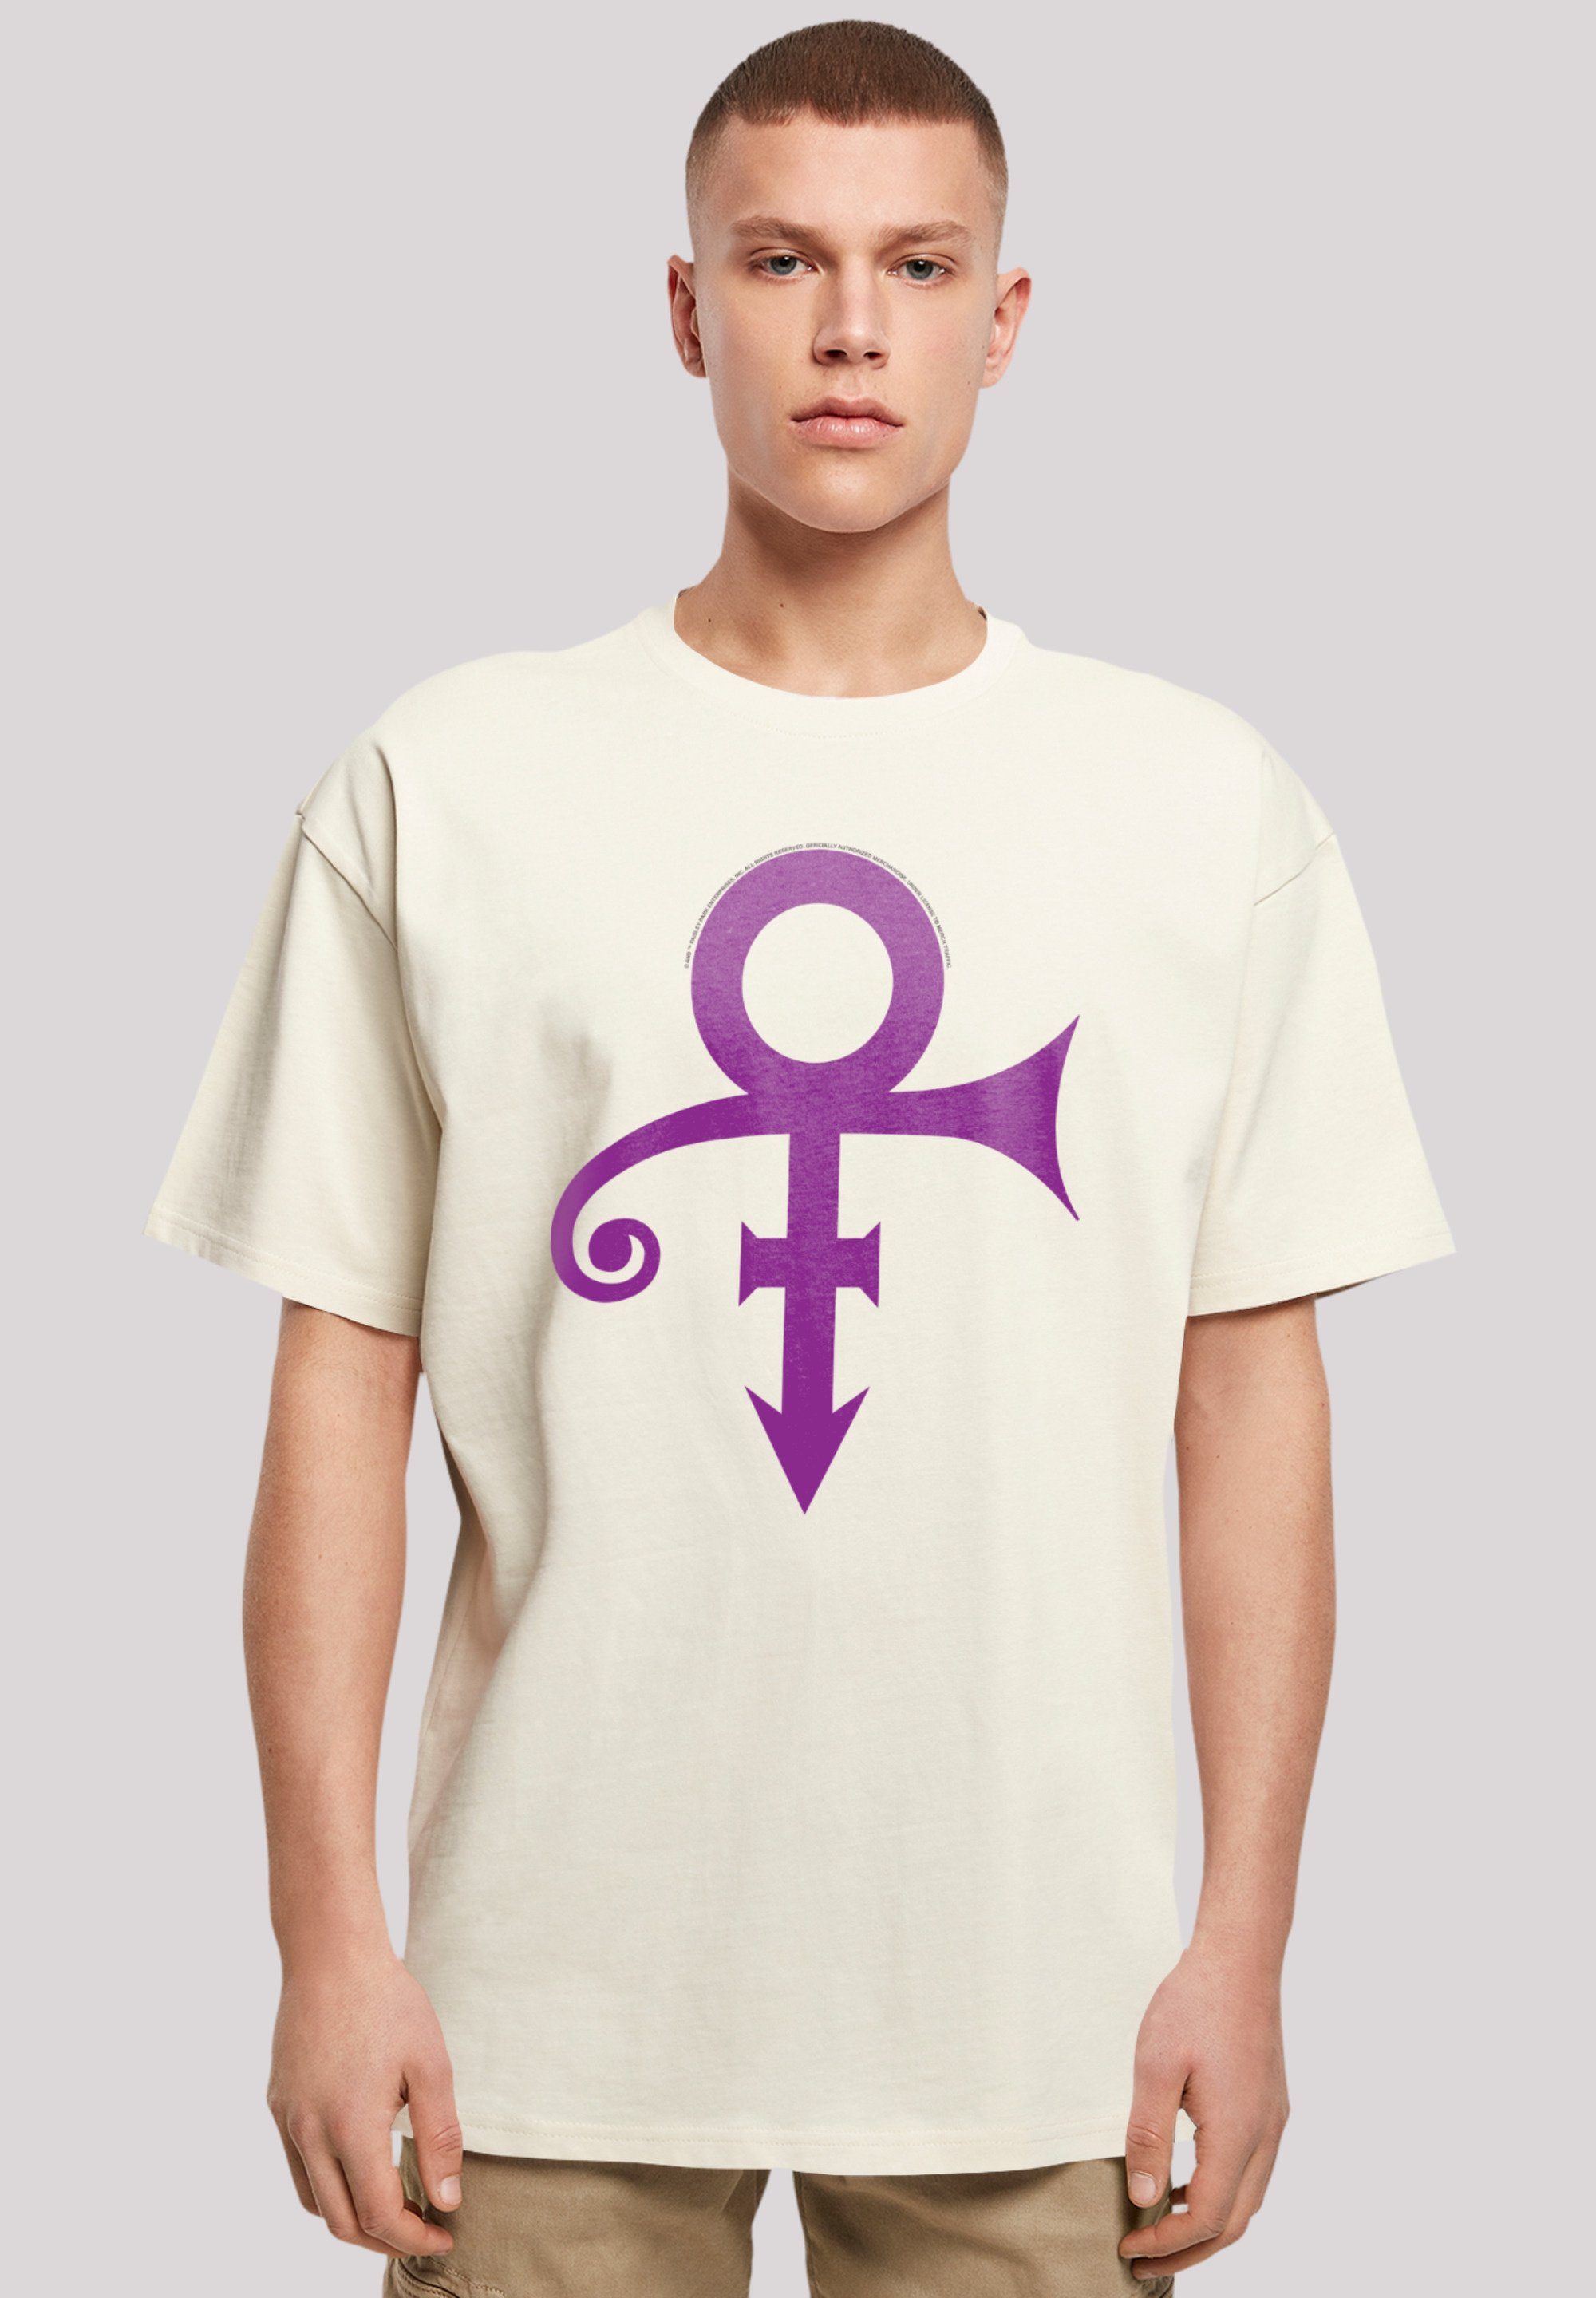 F4NT4STIC T-Shirt Prince Musik Album Logo Premium Qualität, Rock-Musik, Band sand